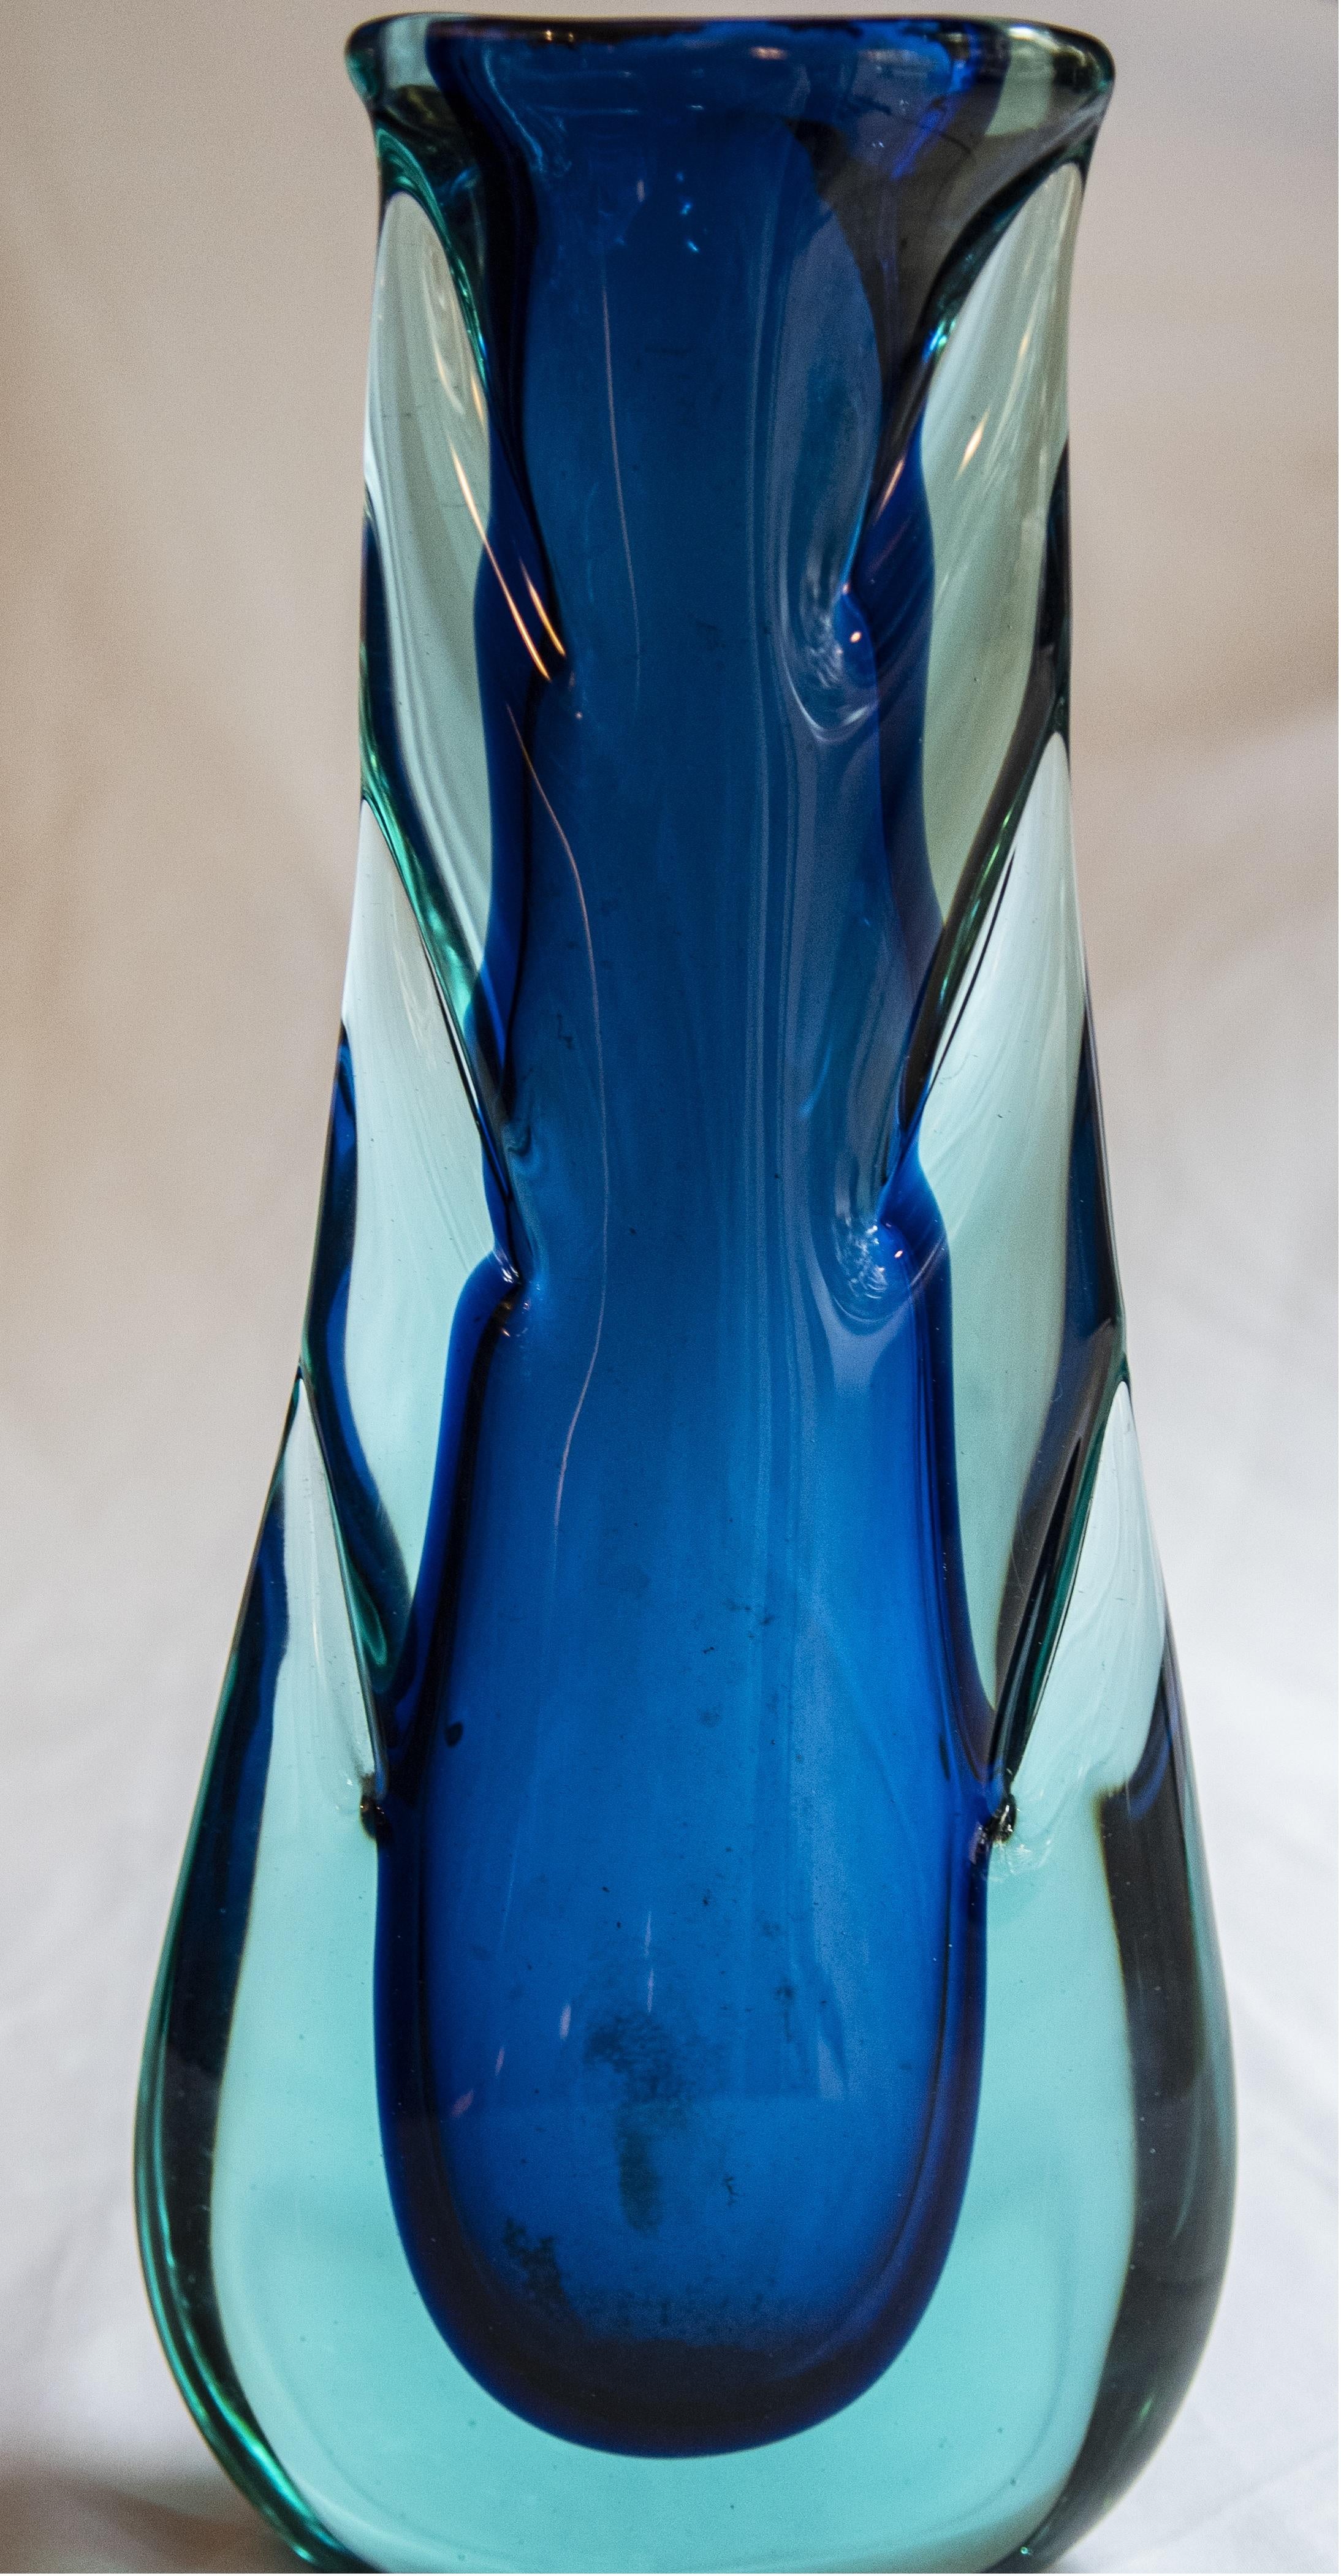 Beautiful Blue Flavio Poli Sommerso vase glass.
Murano, Italy, 1960s.